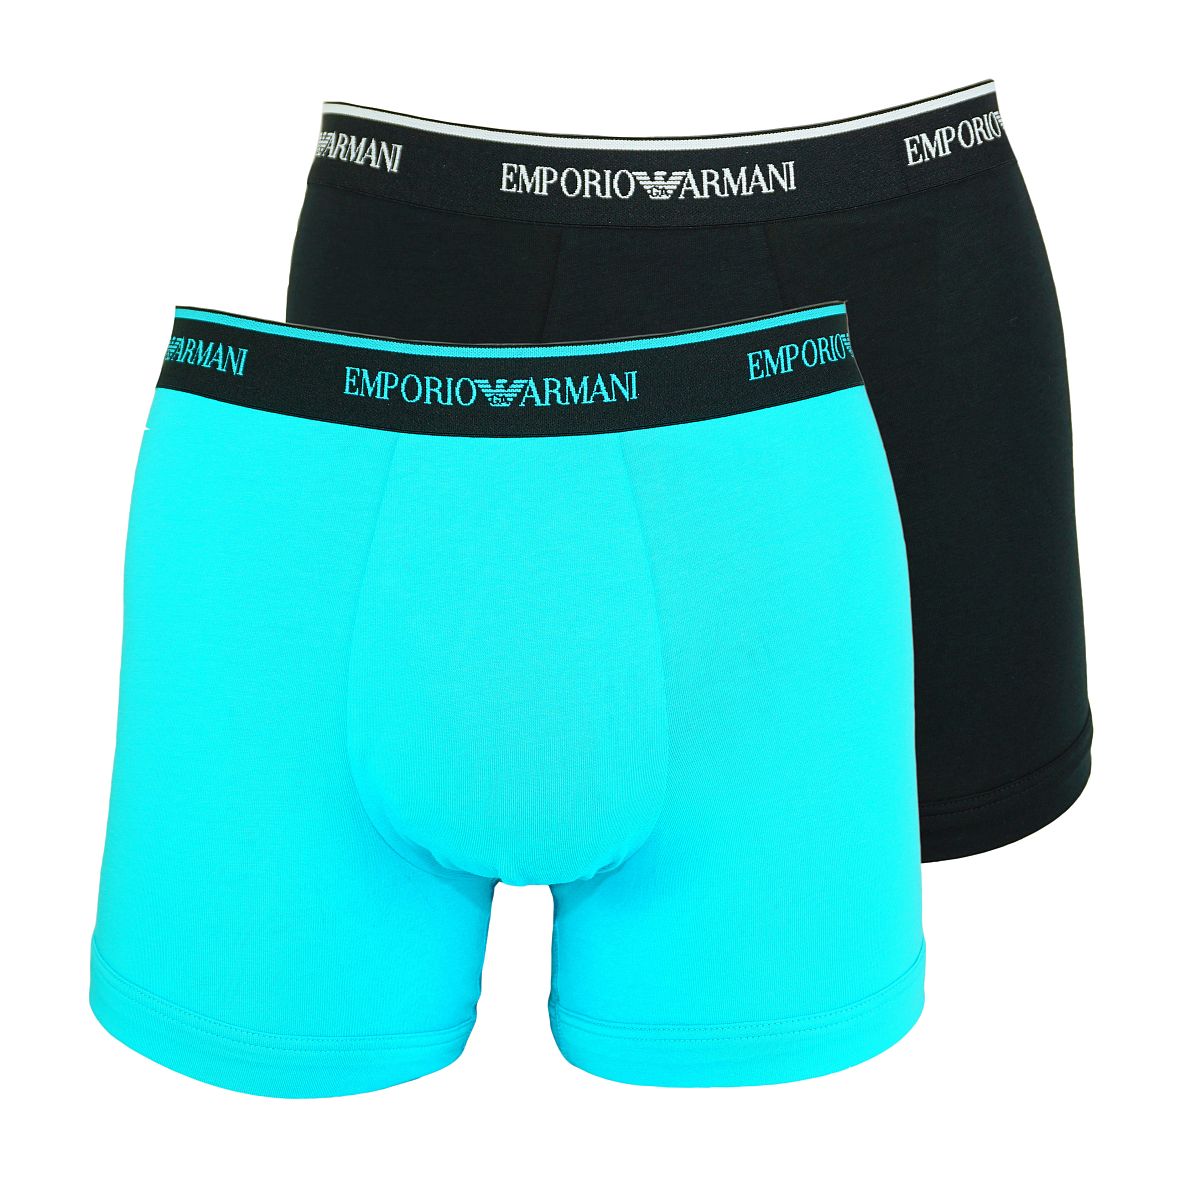 Emporio Armani 2er Pack Shorts Boxer Unterhose 111268 8P717 05320 NERO/TURCHESE W18-EAB1